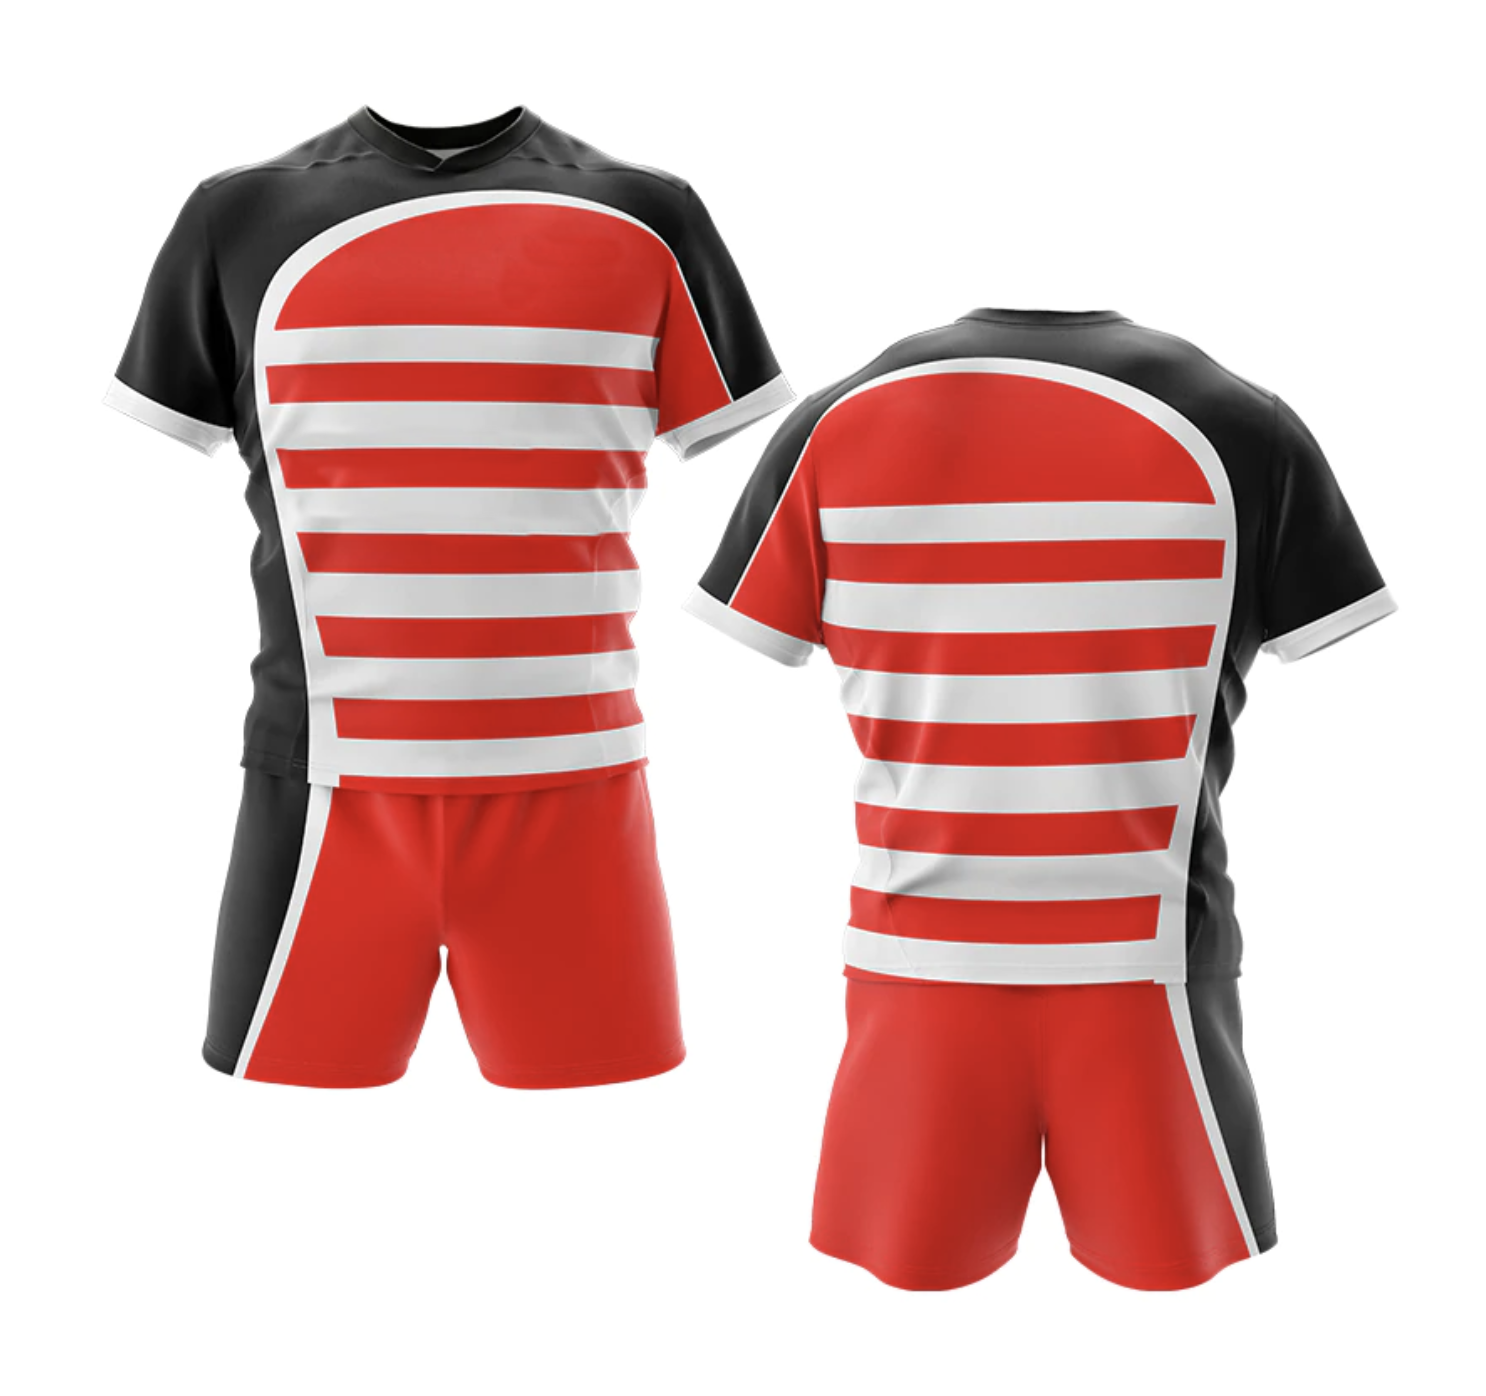 Custom Rugby Uniform - Made in America